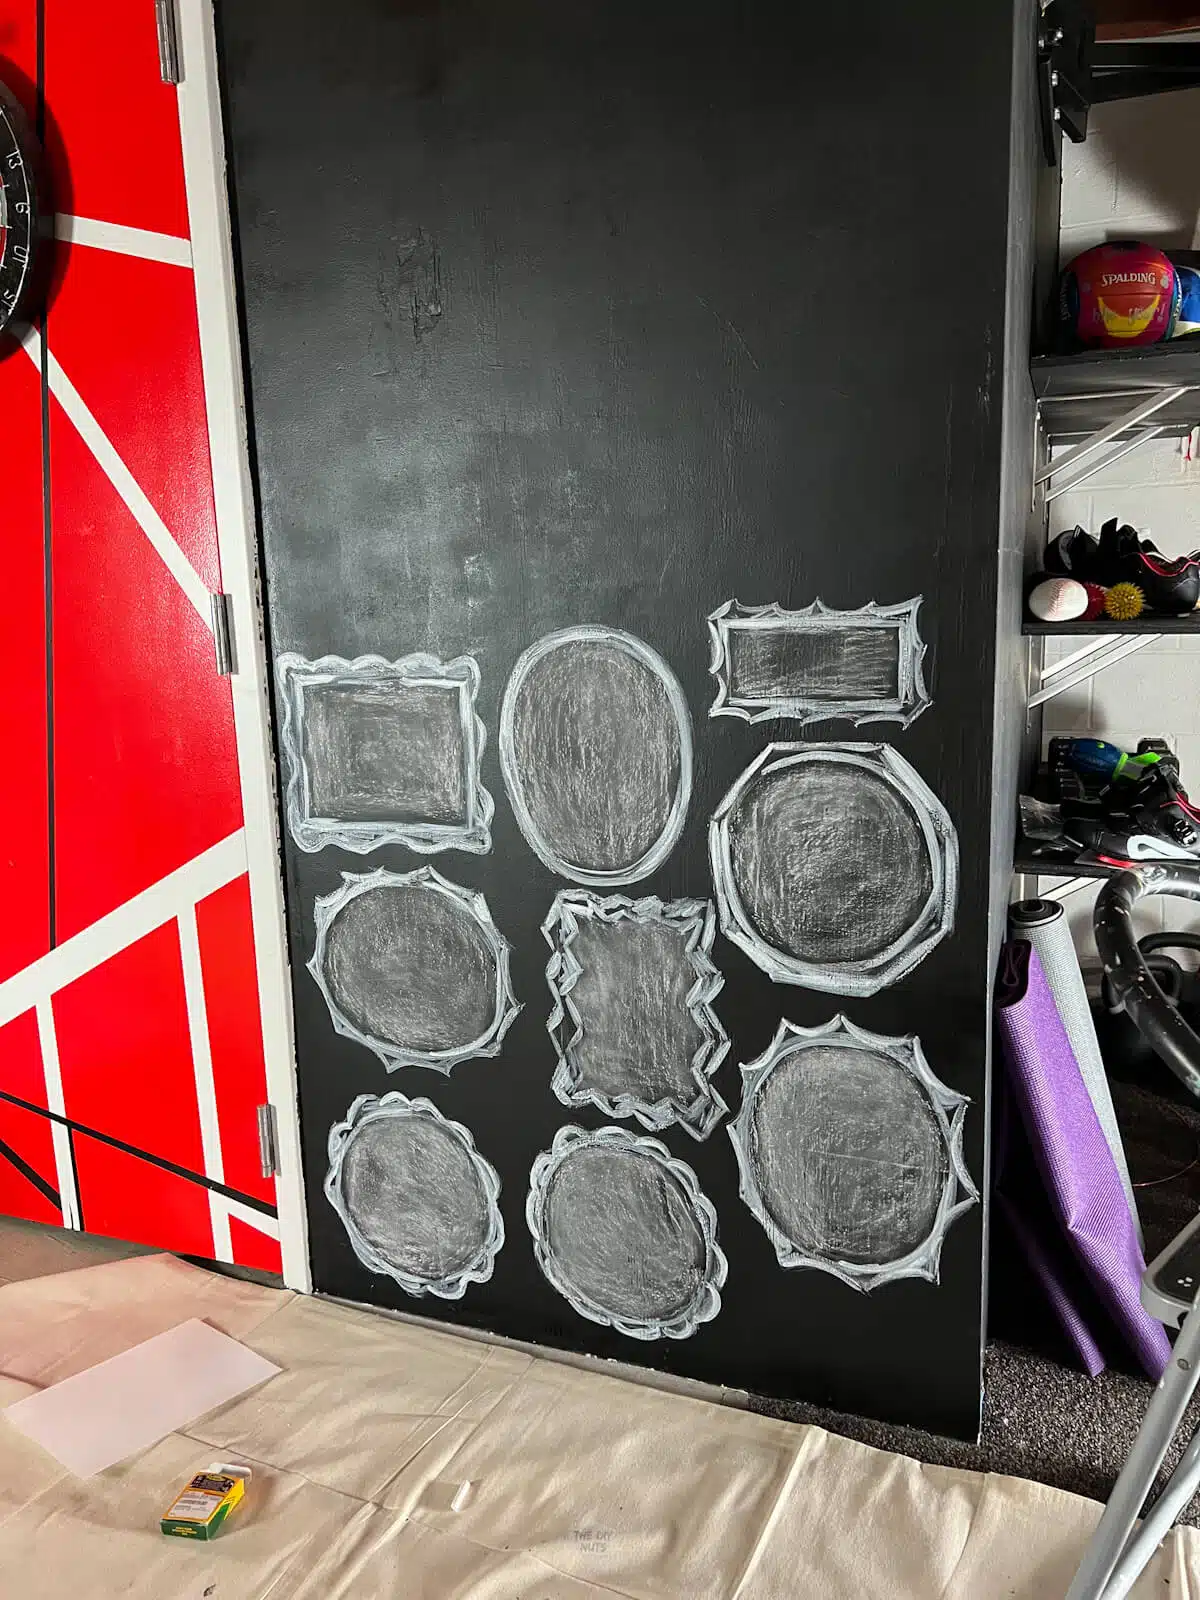 frames on chalkboard painted wall.